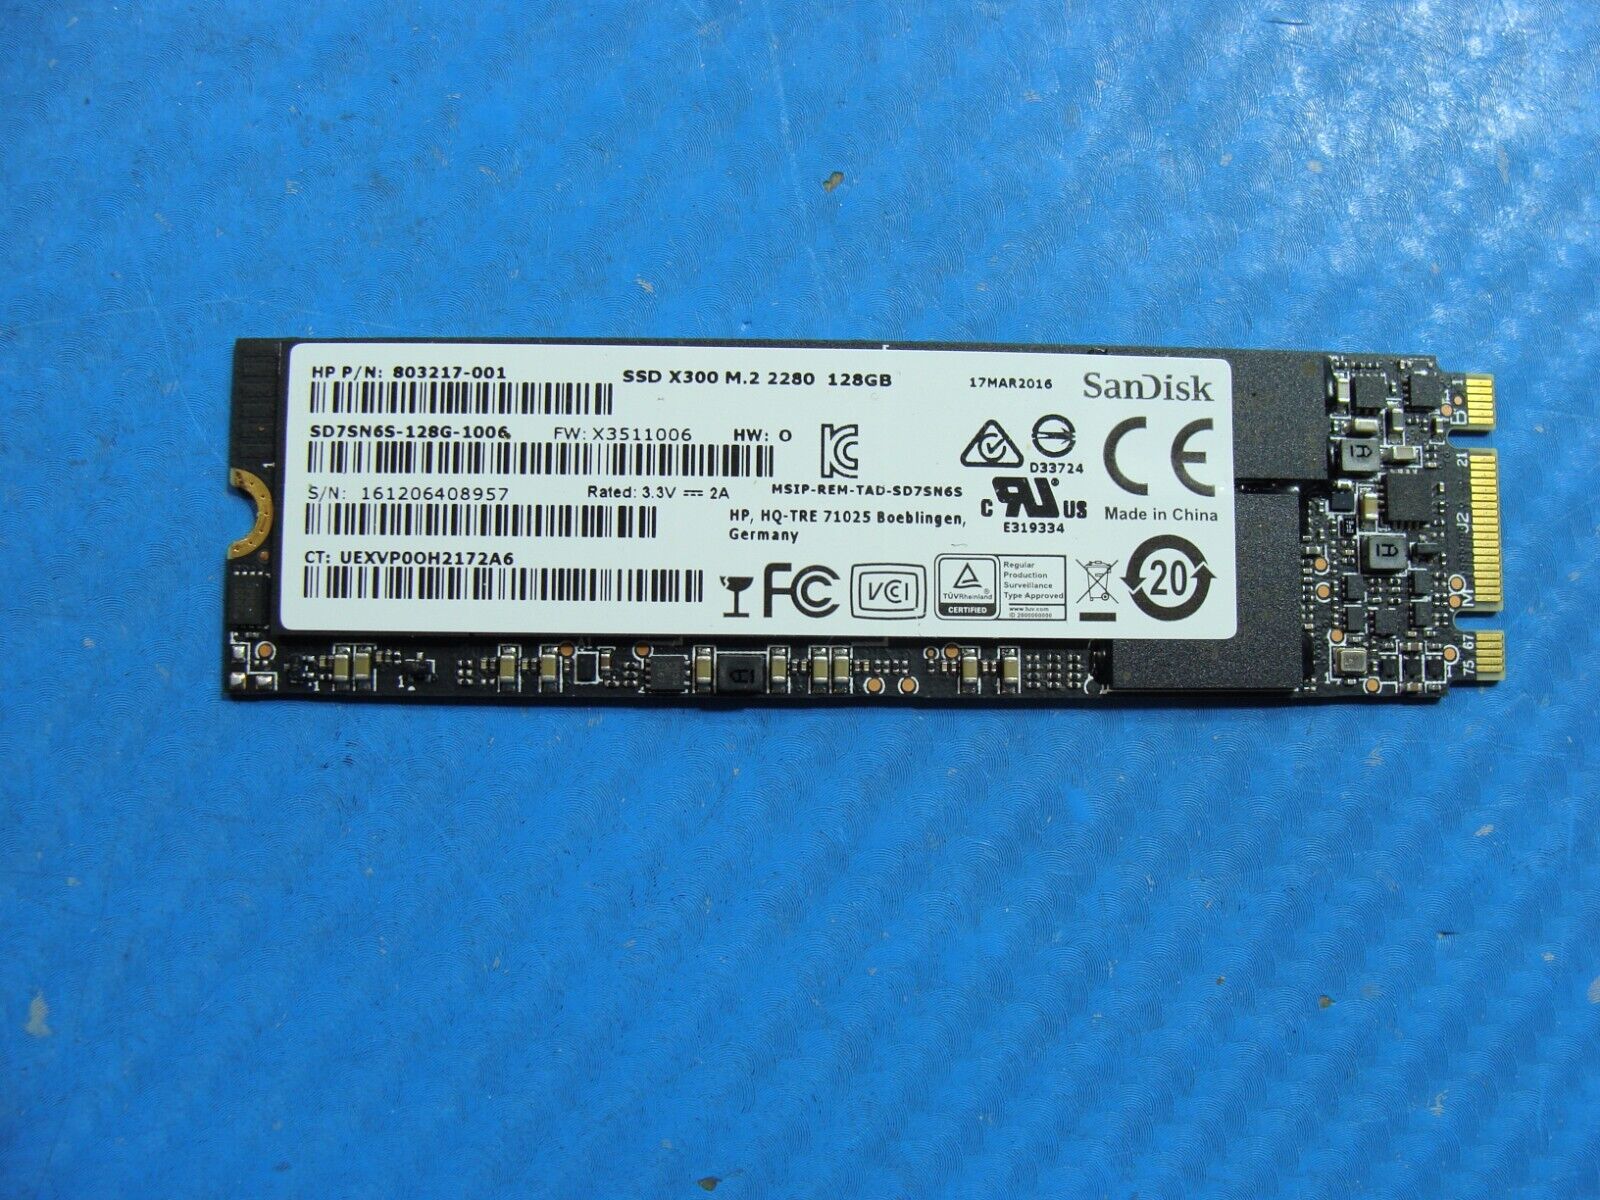 Lenovo Yoga 260 SanDisk 128GB SATA M.2 SSD Solid State Drive SD7SN6S- 128G-1006